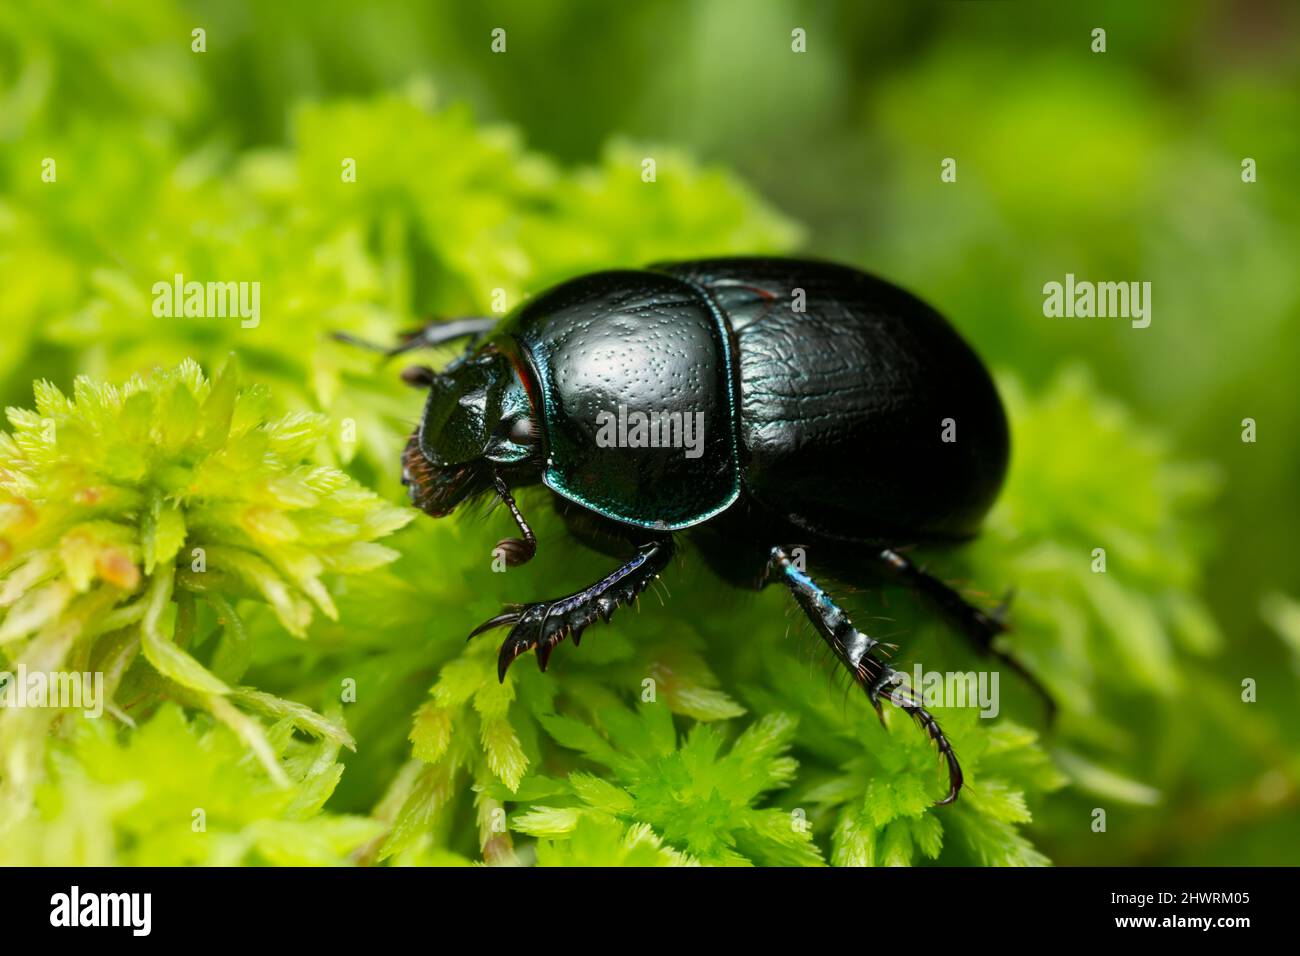 Earth-boring dung beetle, Geotrupidae on green moss, macro photo Stock Photo